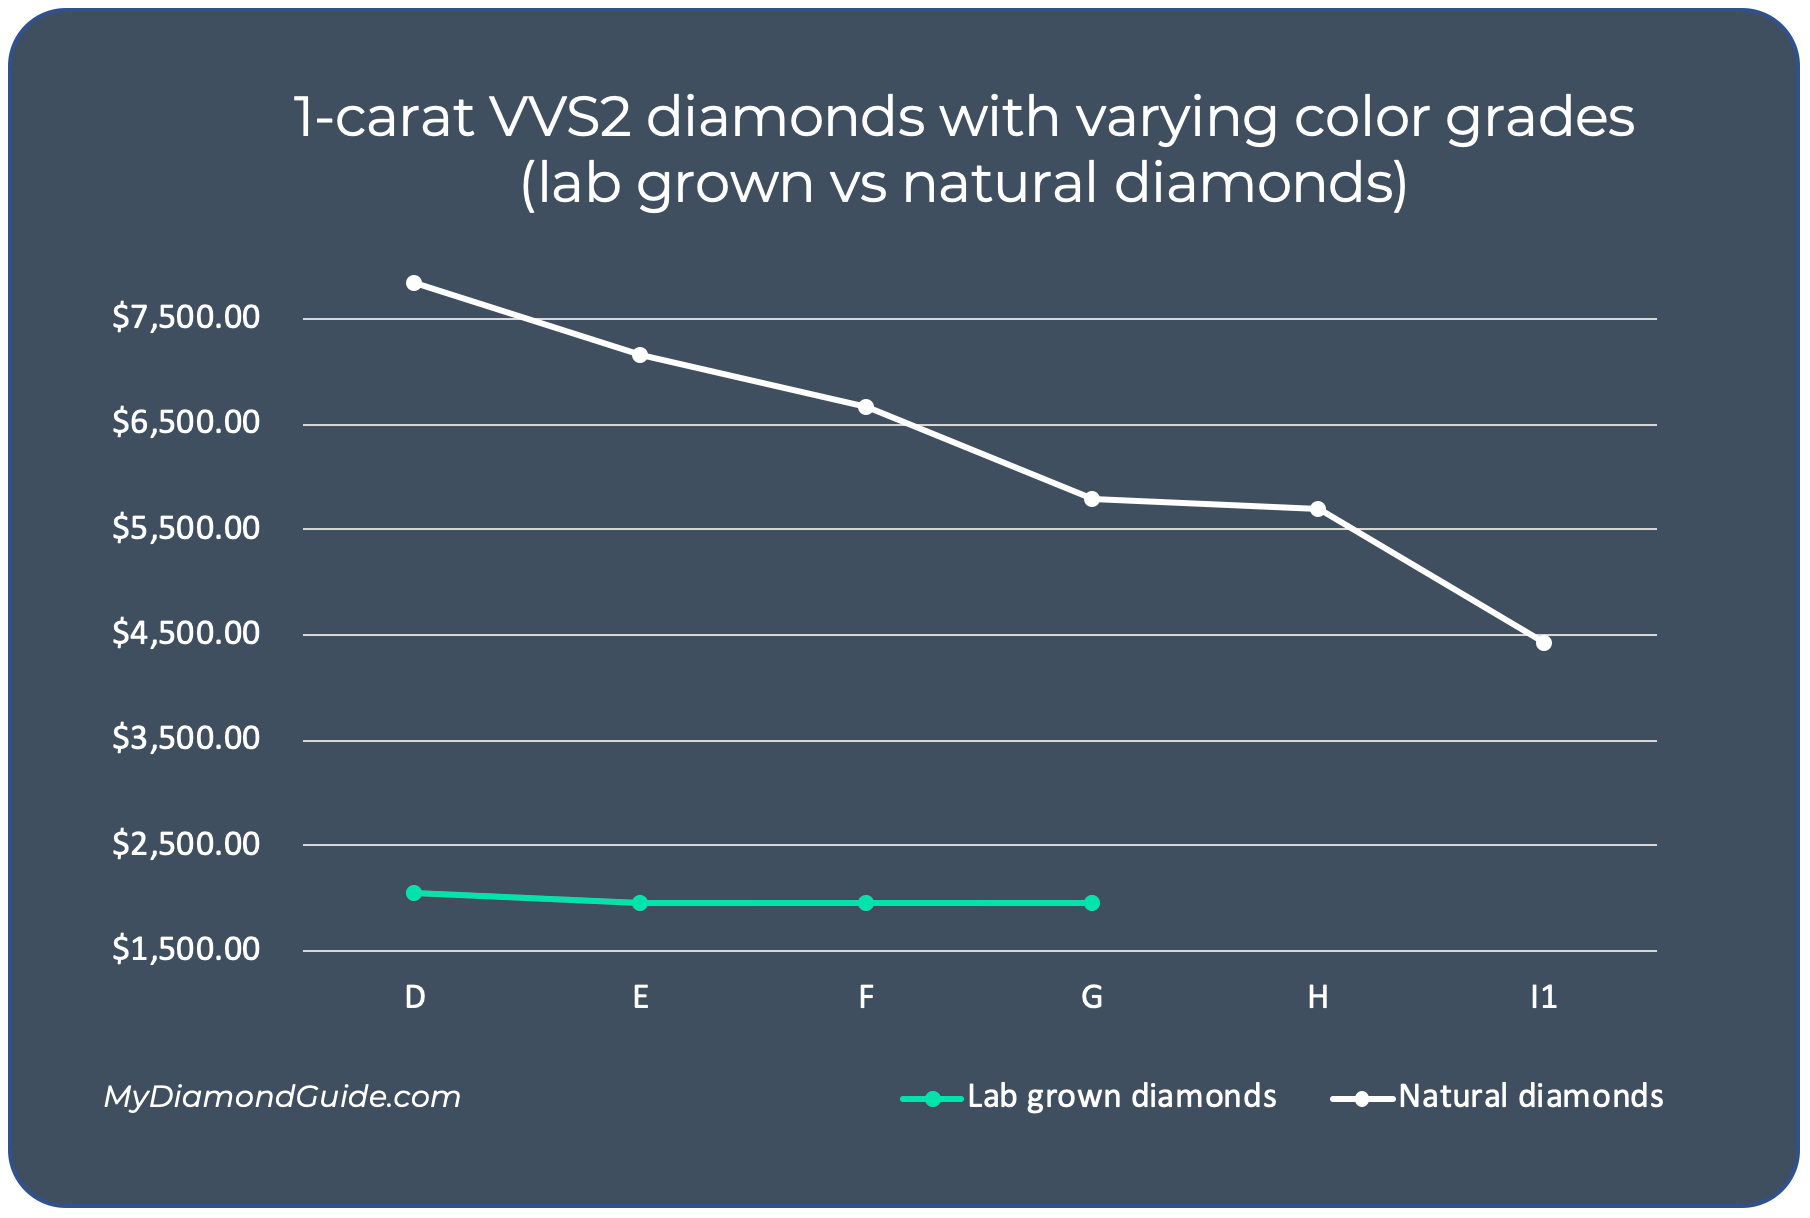 Diamond Price Comparison of Natural vs lab-created diamonds